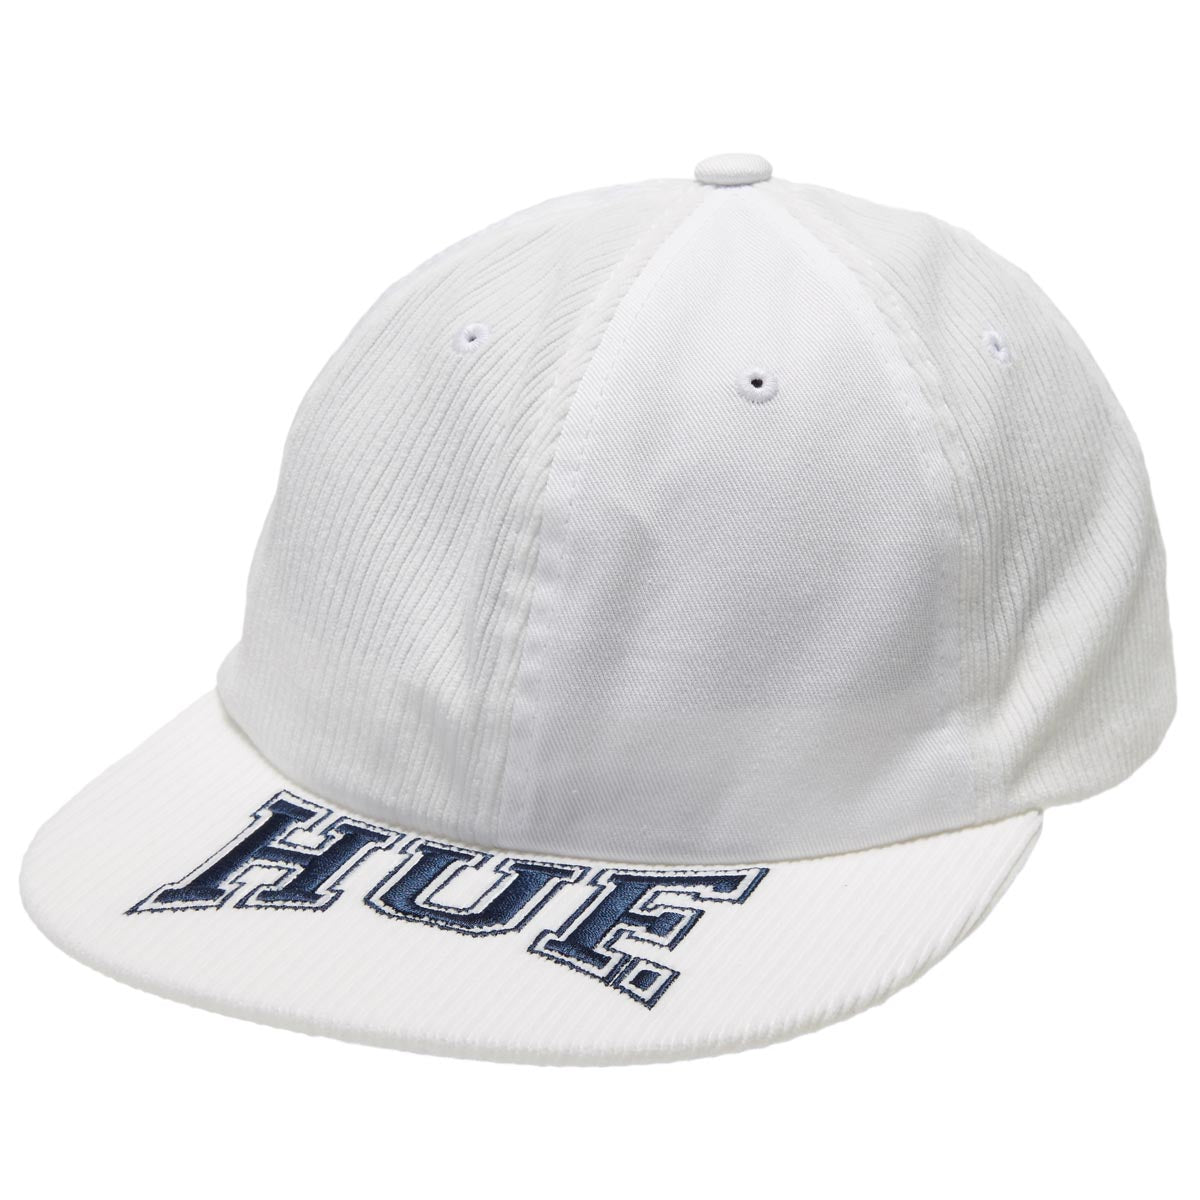 HUF Classic H Pin Wheel 6 Panel Hat - White image 1